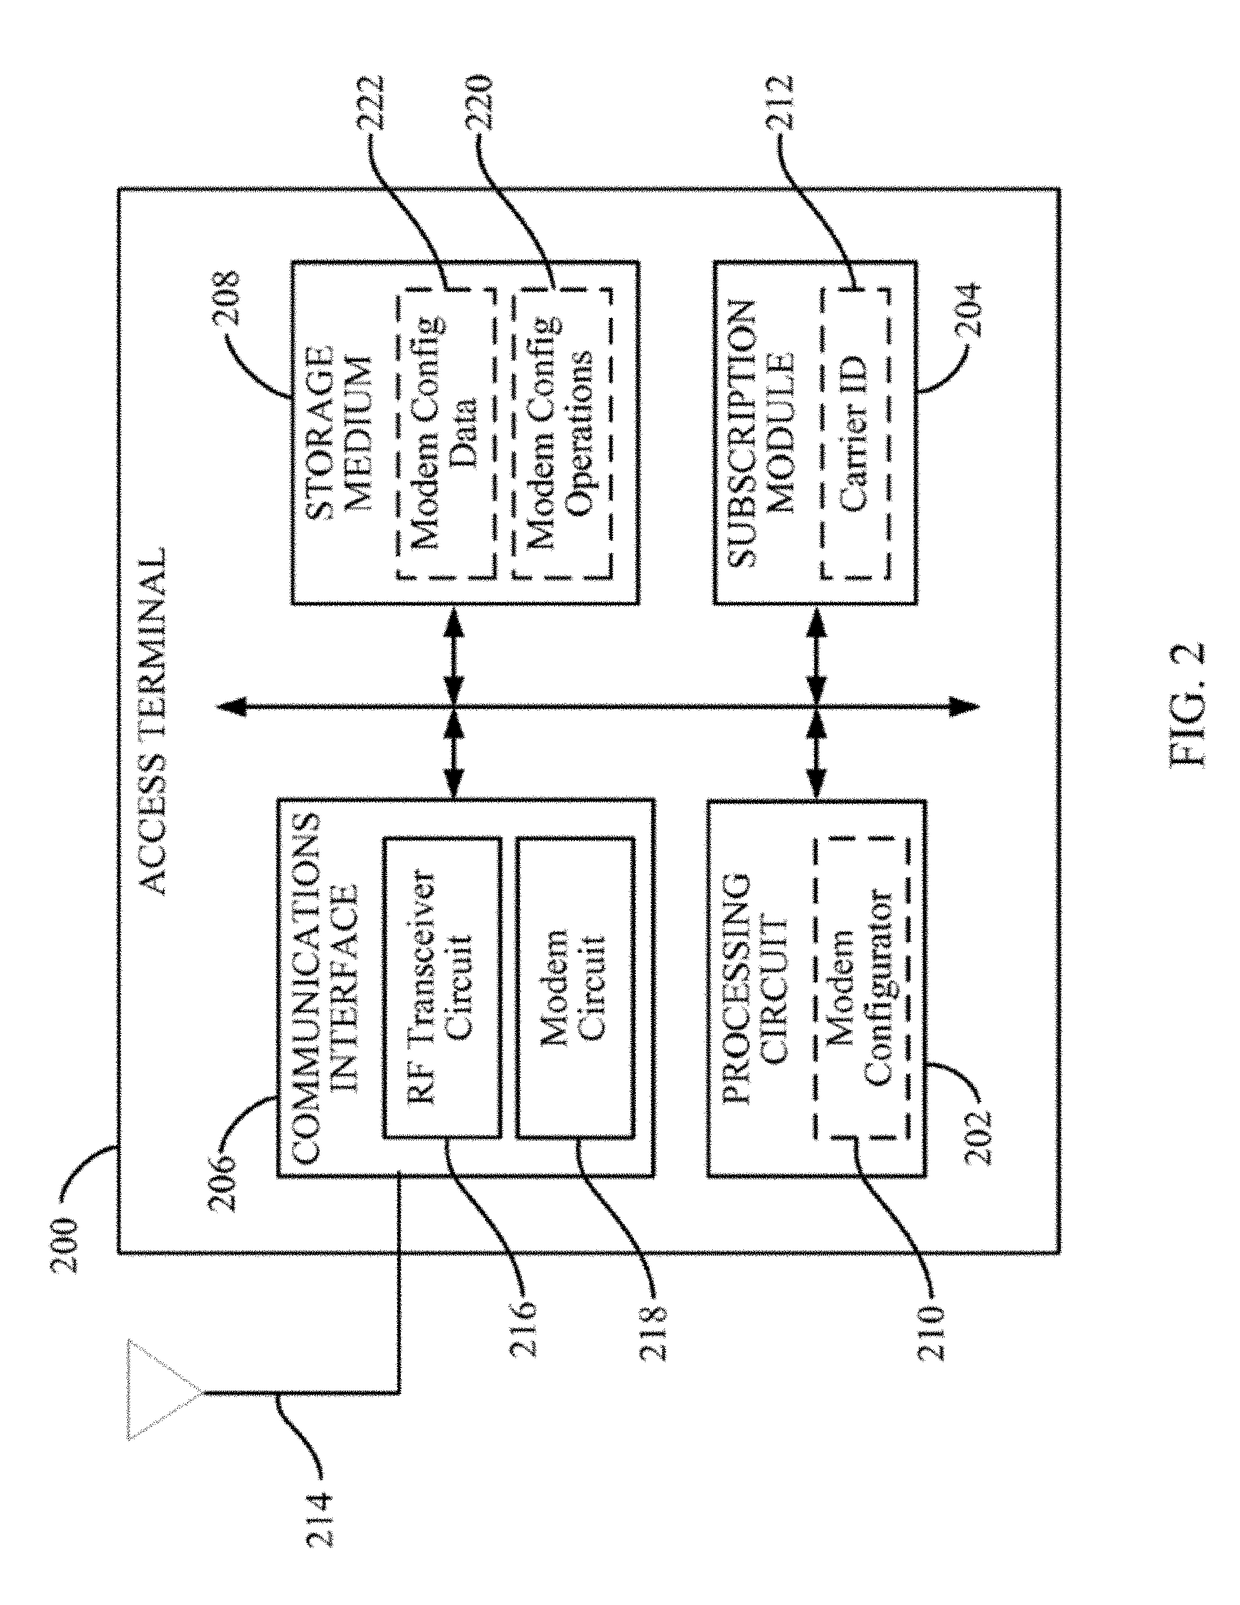 Enhanced modem based carrier auto-selection algorithm